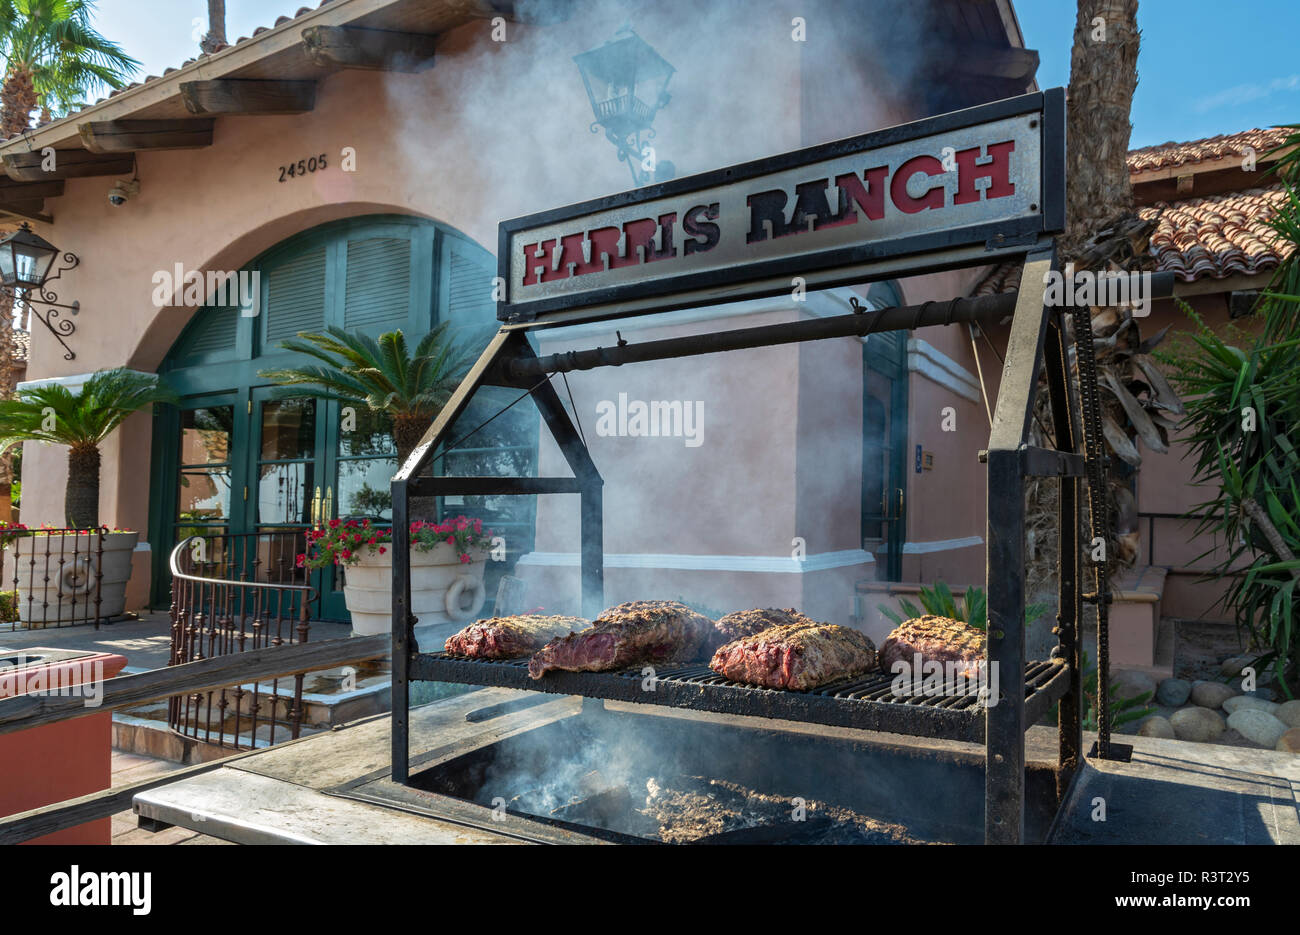 California, Coalinga, Harris Ranch Inn & Restaurant, meat on barbecue grill Stock Photo